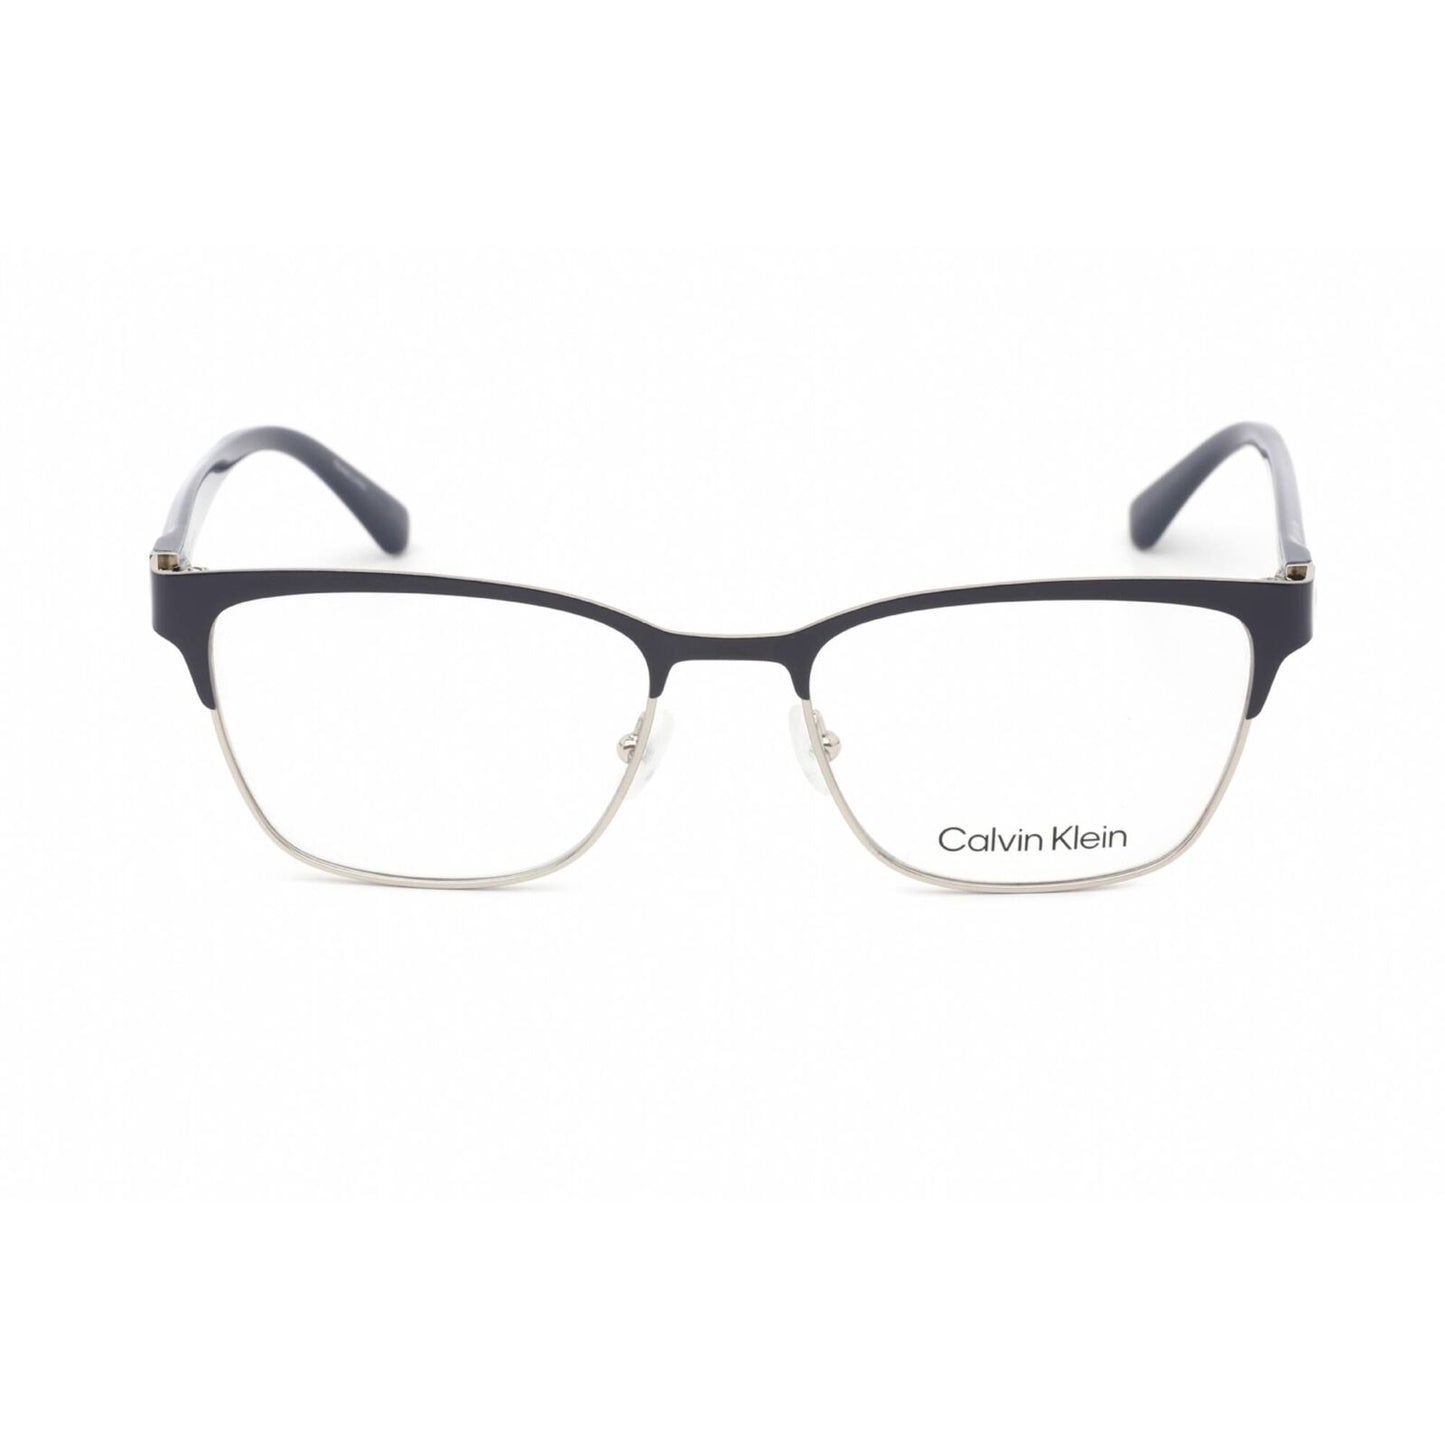 Calvin Klein CK21125-438-5217 52mm New Eyeglasses